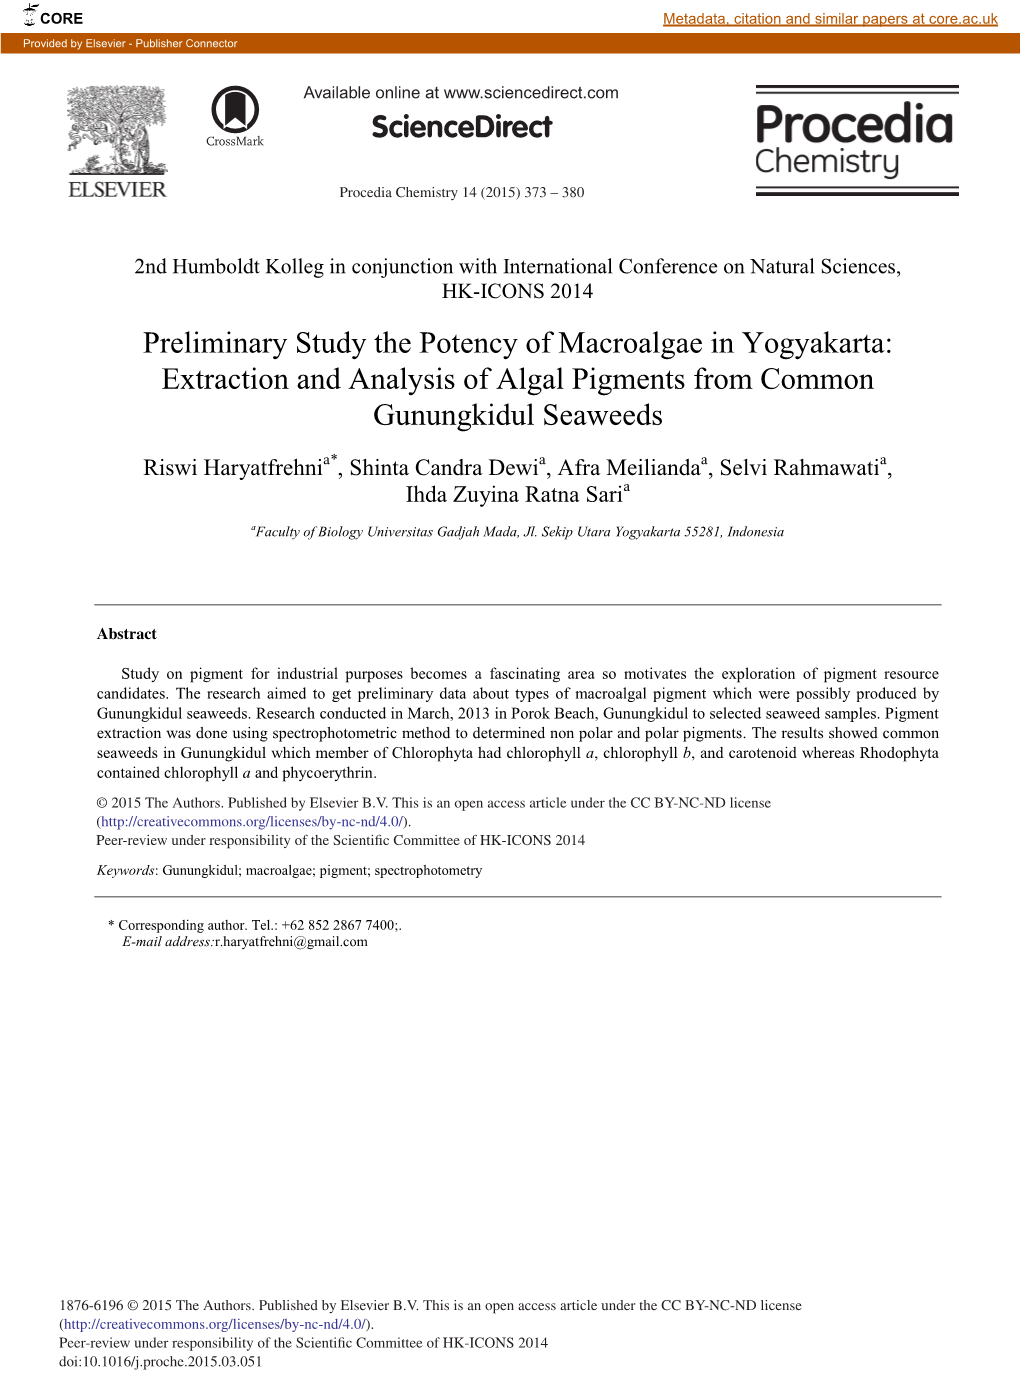 Preliminary Study the Potency of Macroalgae in Yogyakarta: Extraction and Analysis of Algal Pigments from Common Gunungkidul Seaweeds